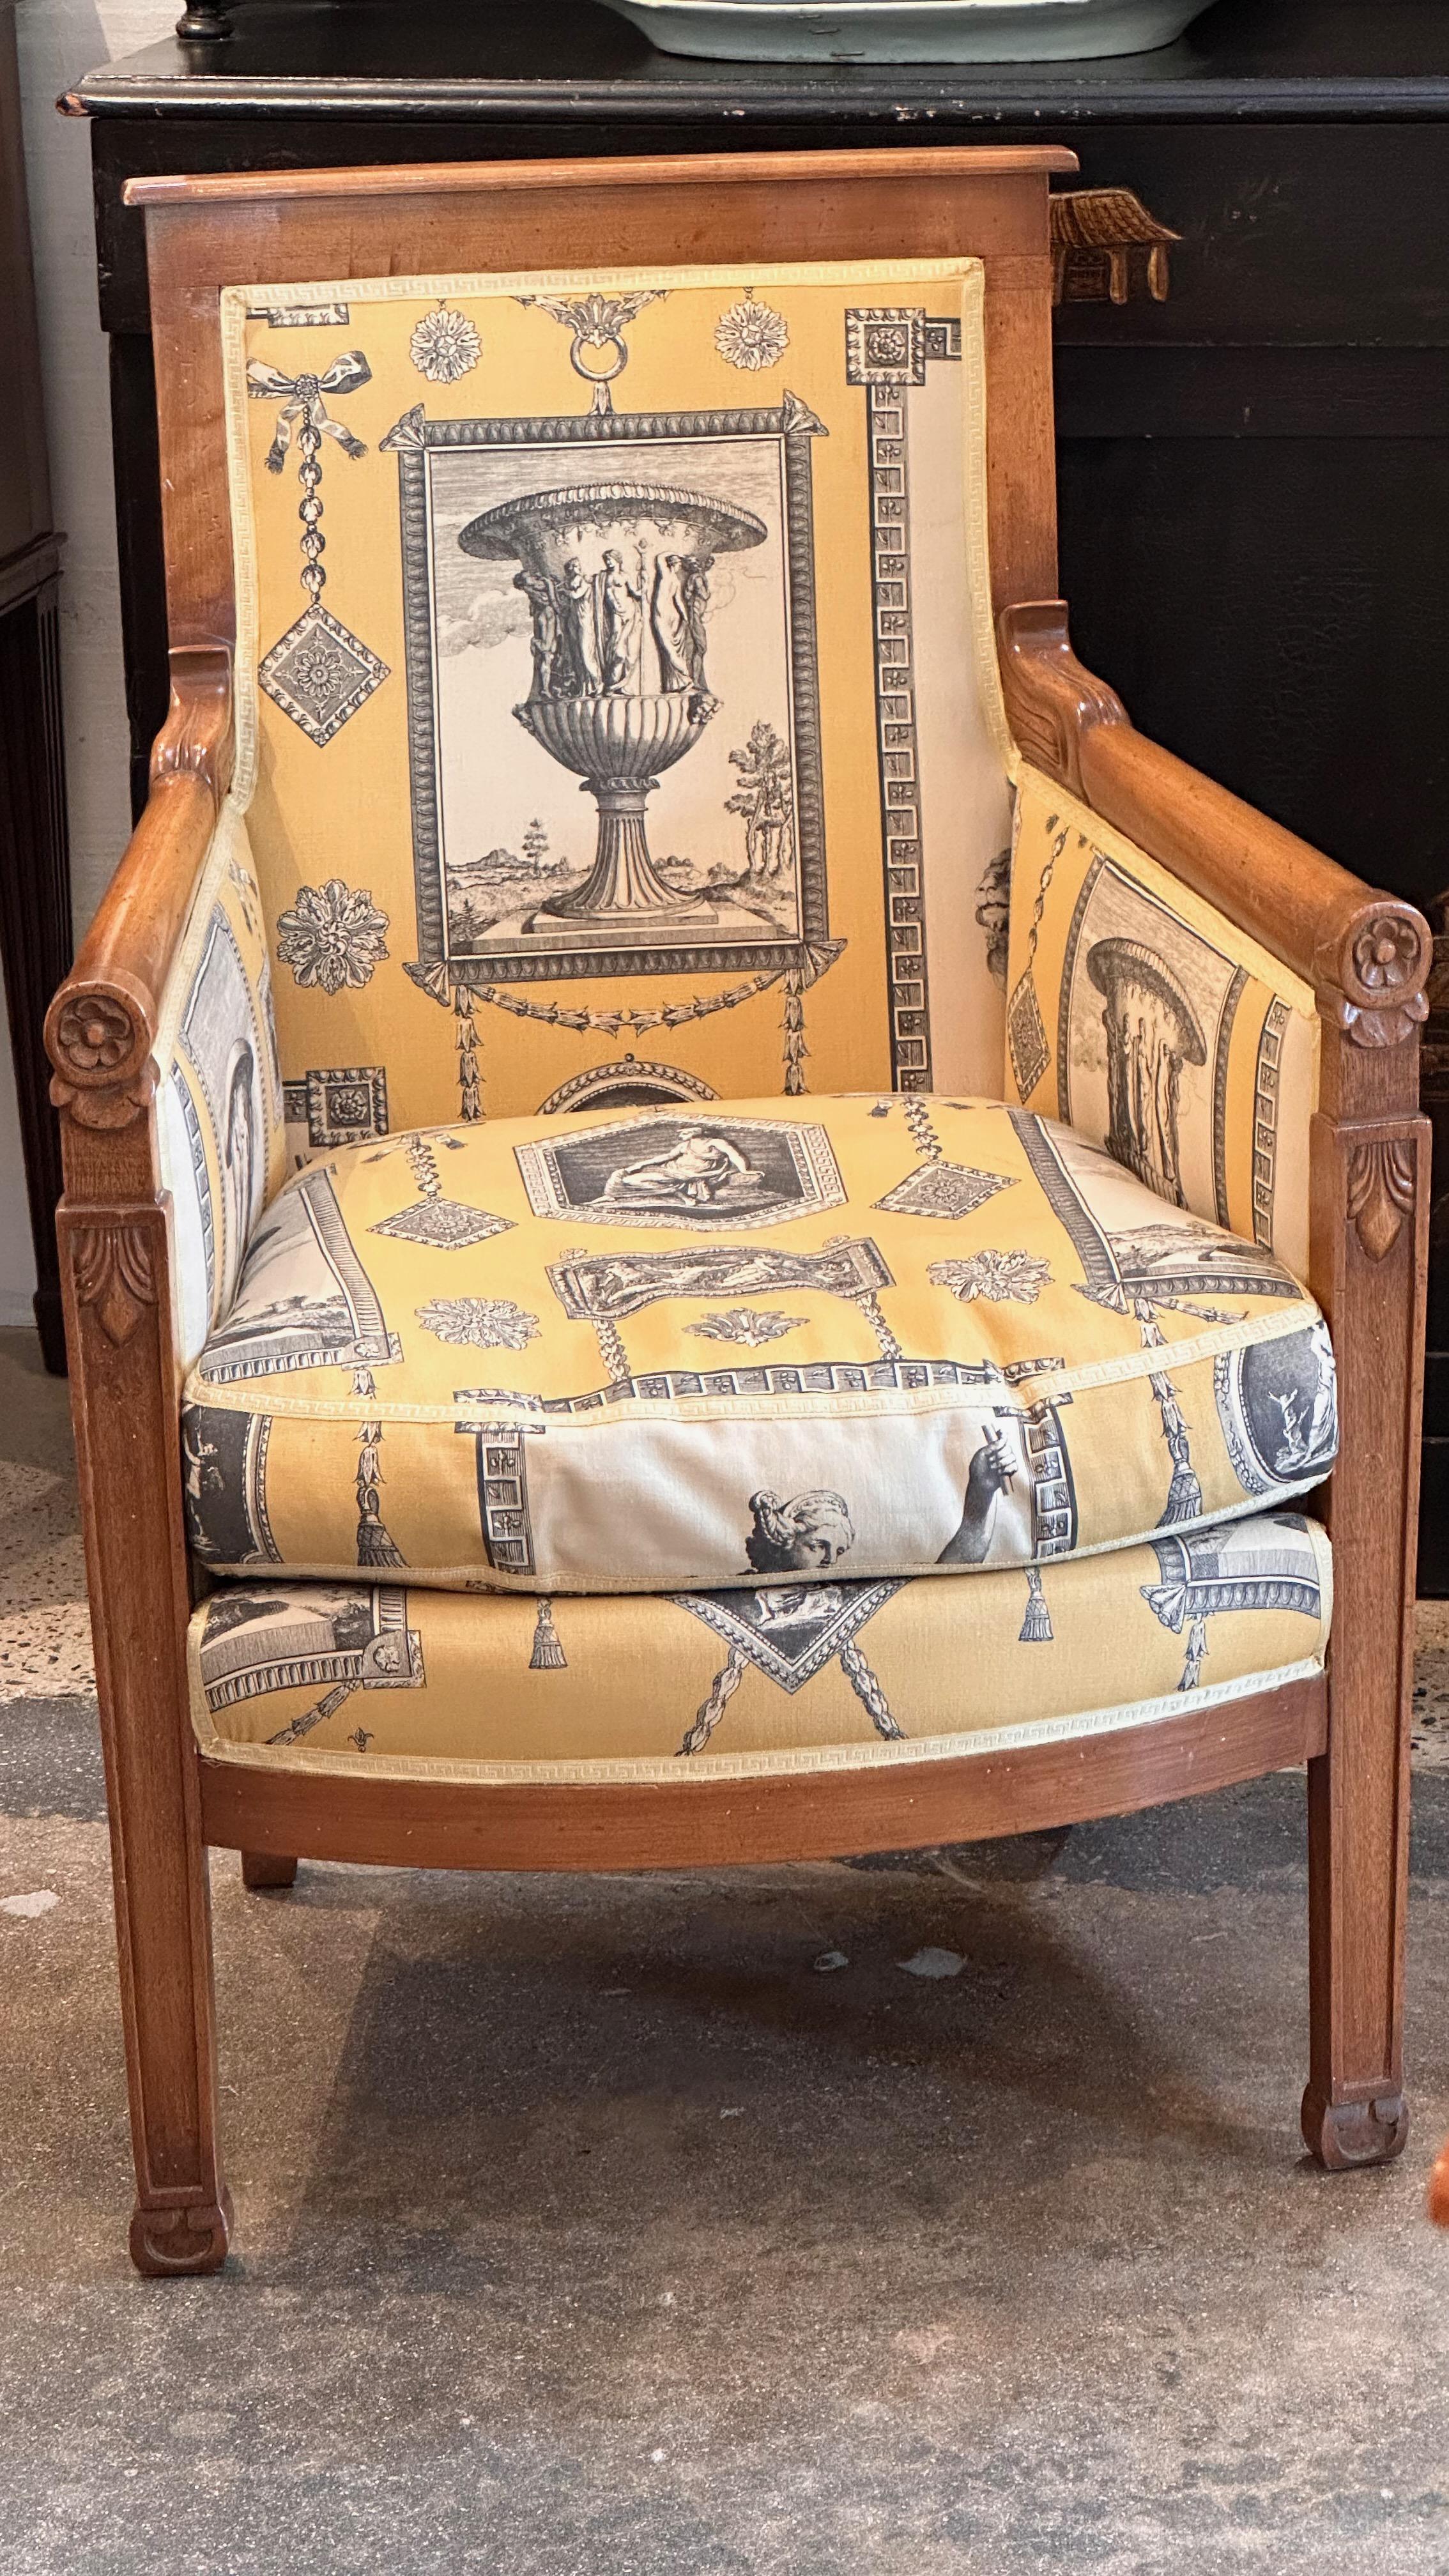 Very nice chair. Cherry frame? Great choice of fabric